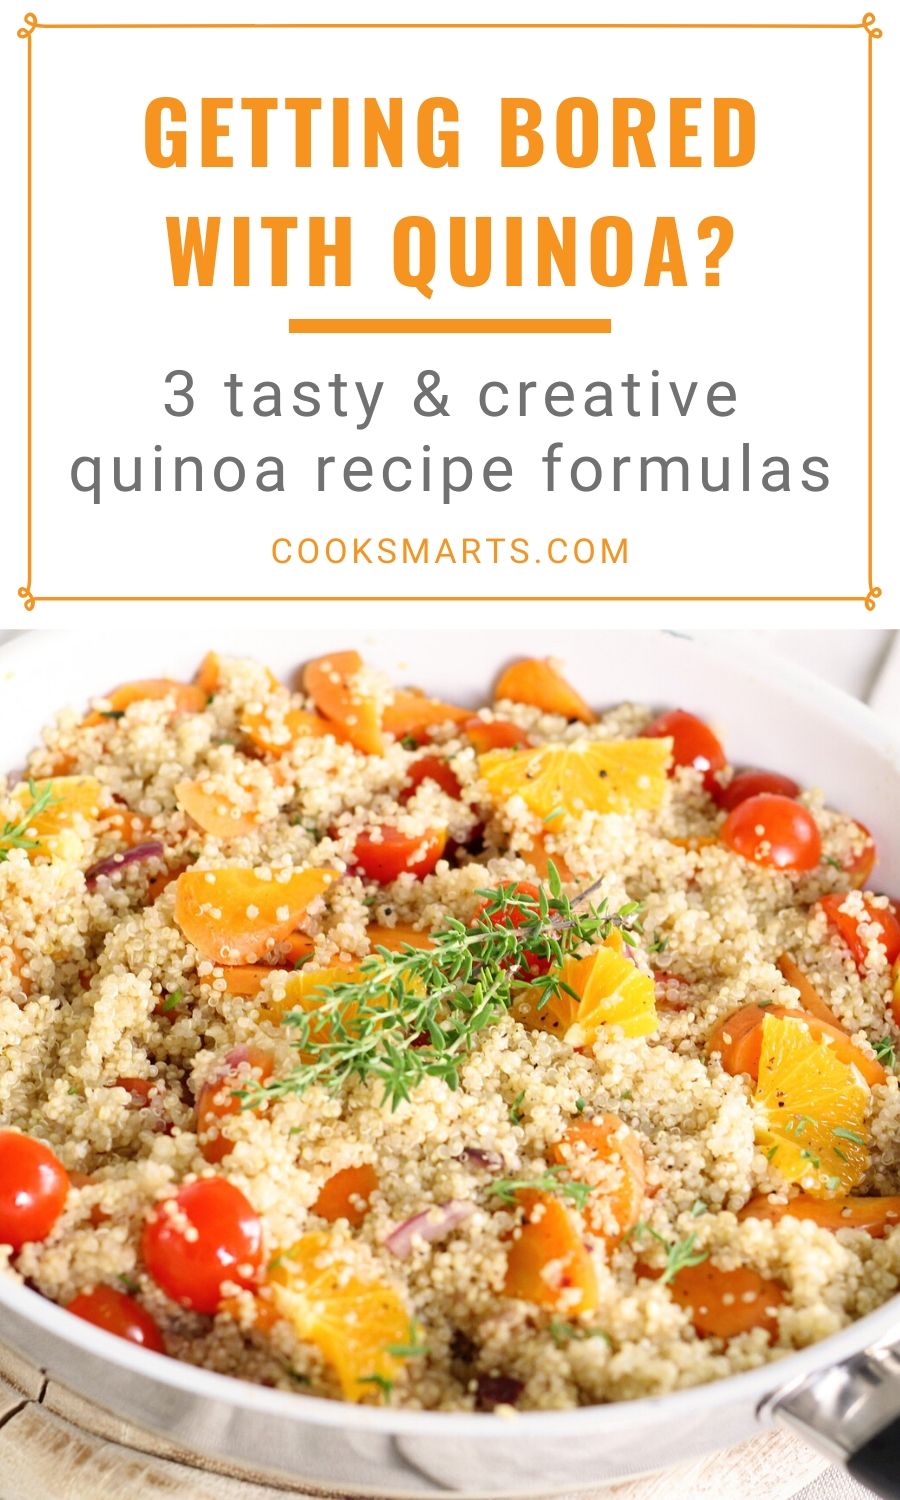 3 Ways to Use Quinoa | Cook Smarts